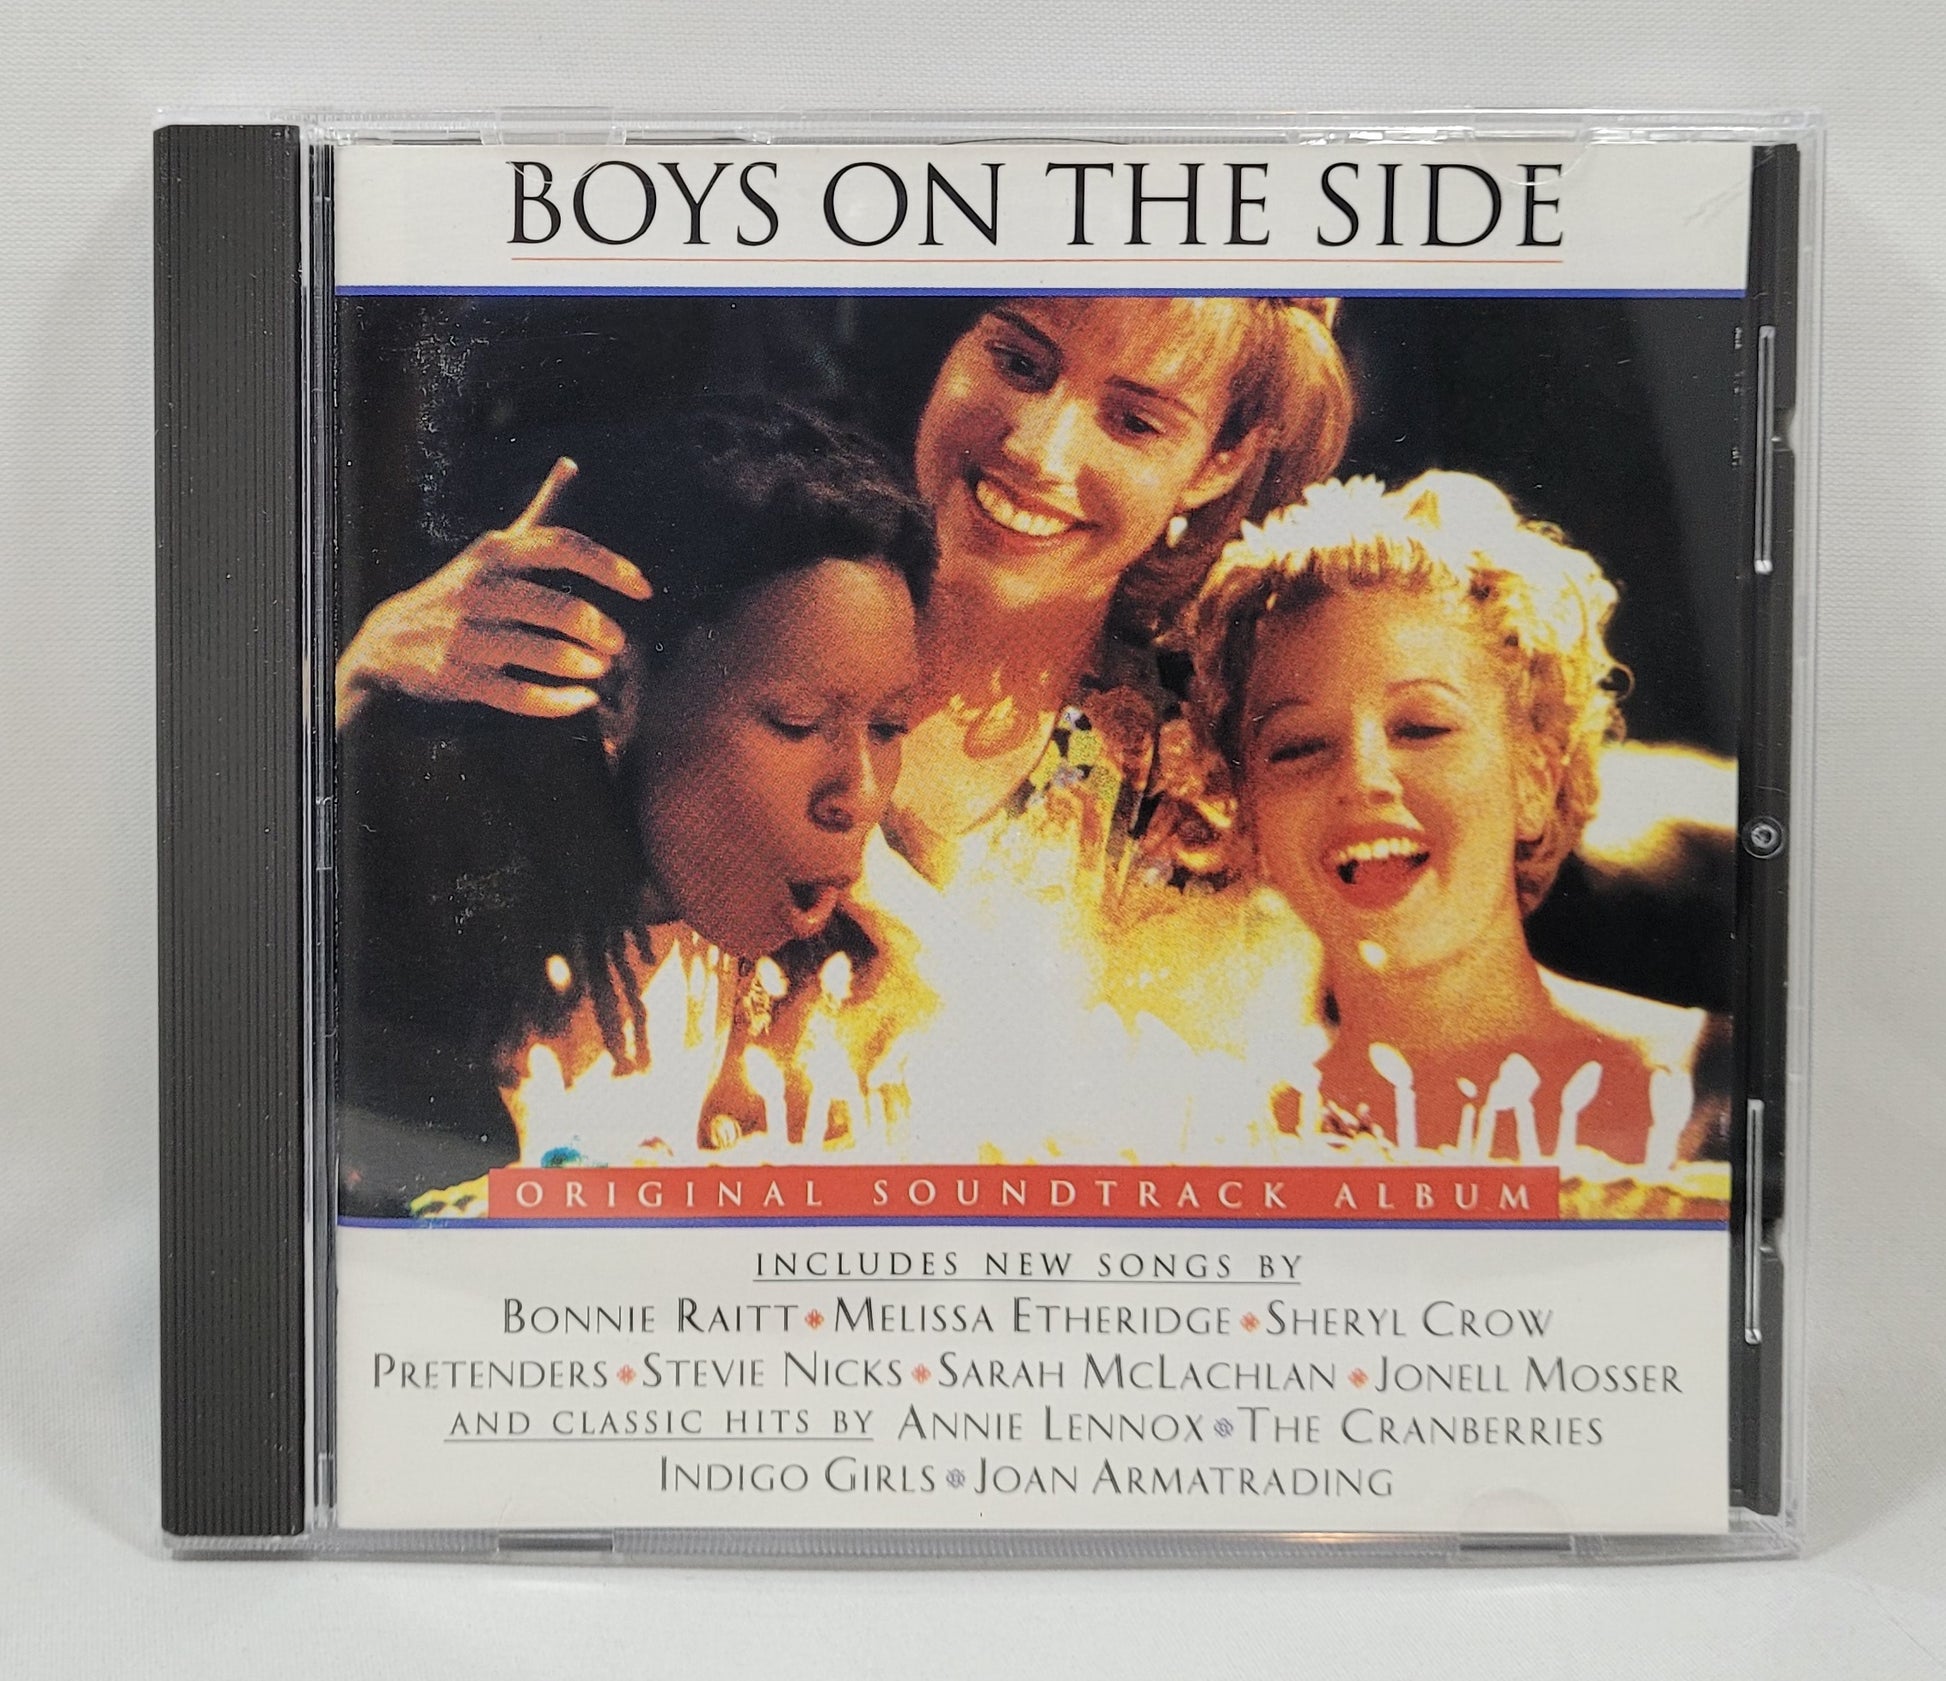 Soundtrack - Boys on the Side (Original Soundtrack Album) [1995 Club Edition] [Used CD]